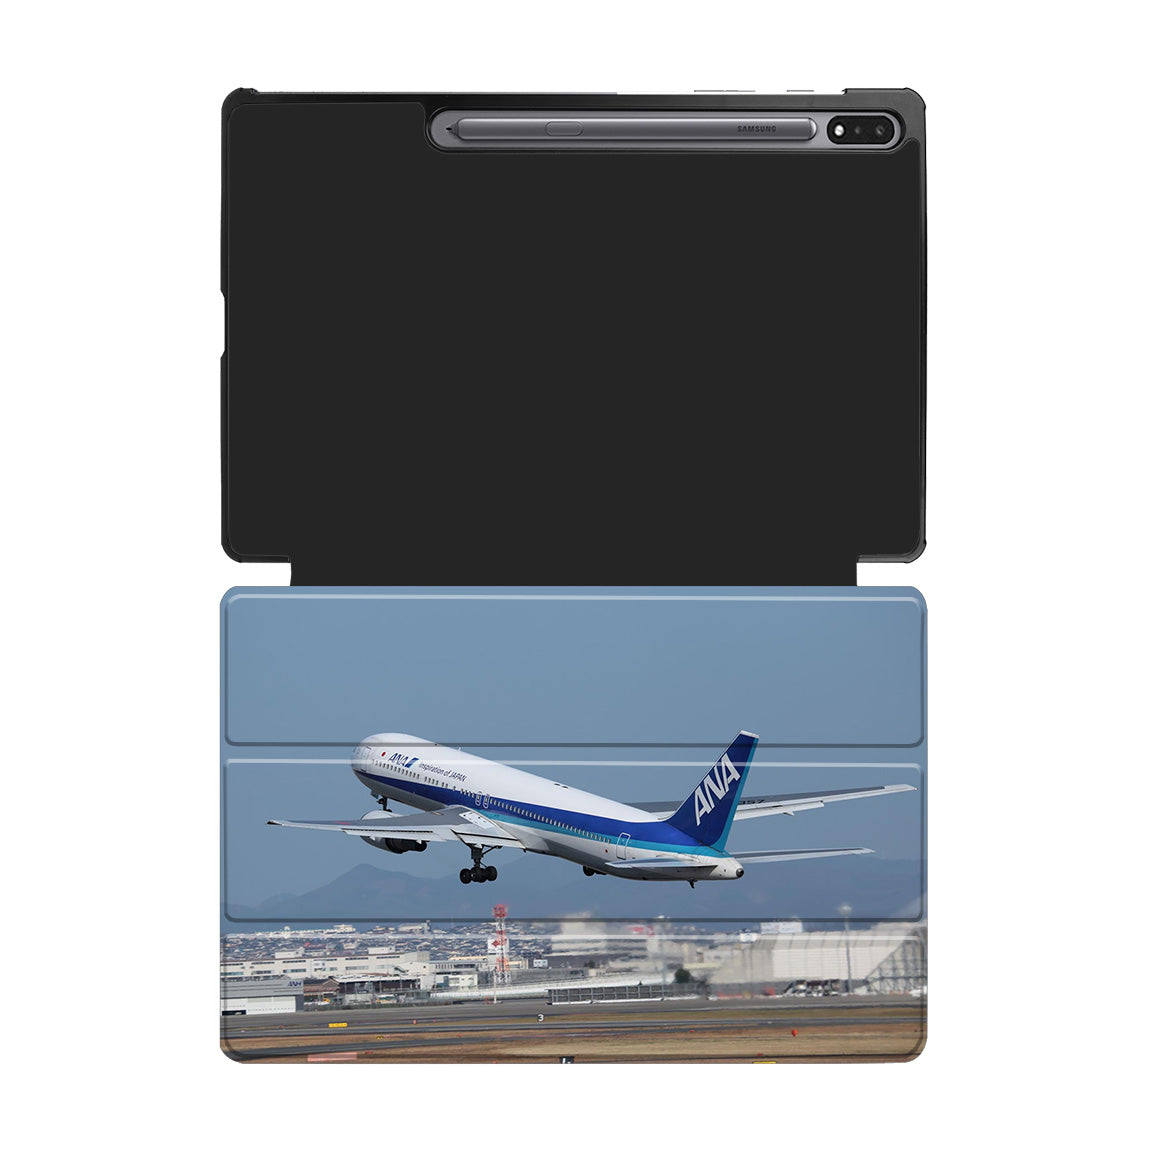 Departing ANA's Boeing 767 Designed iPad Cases